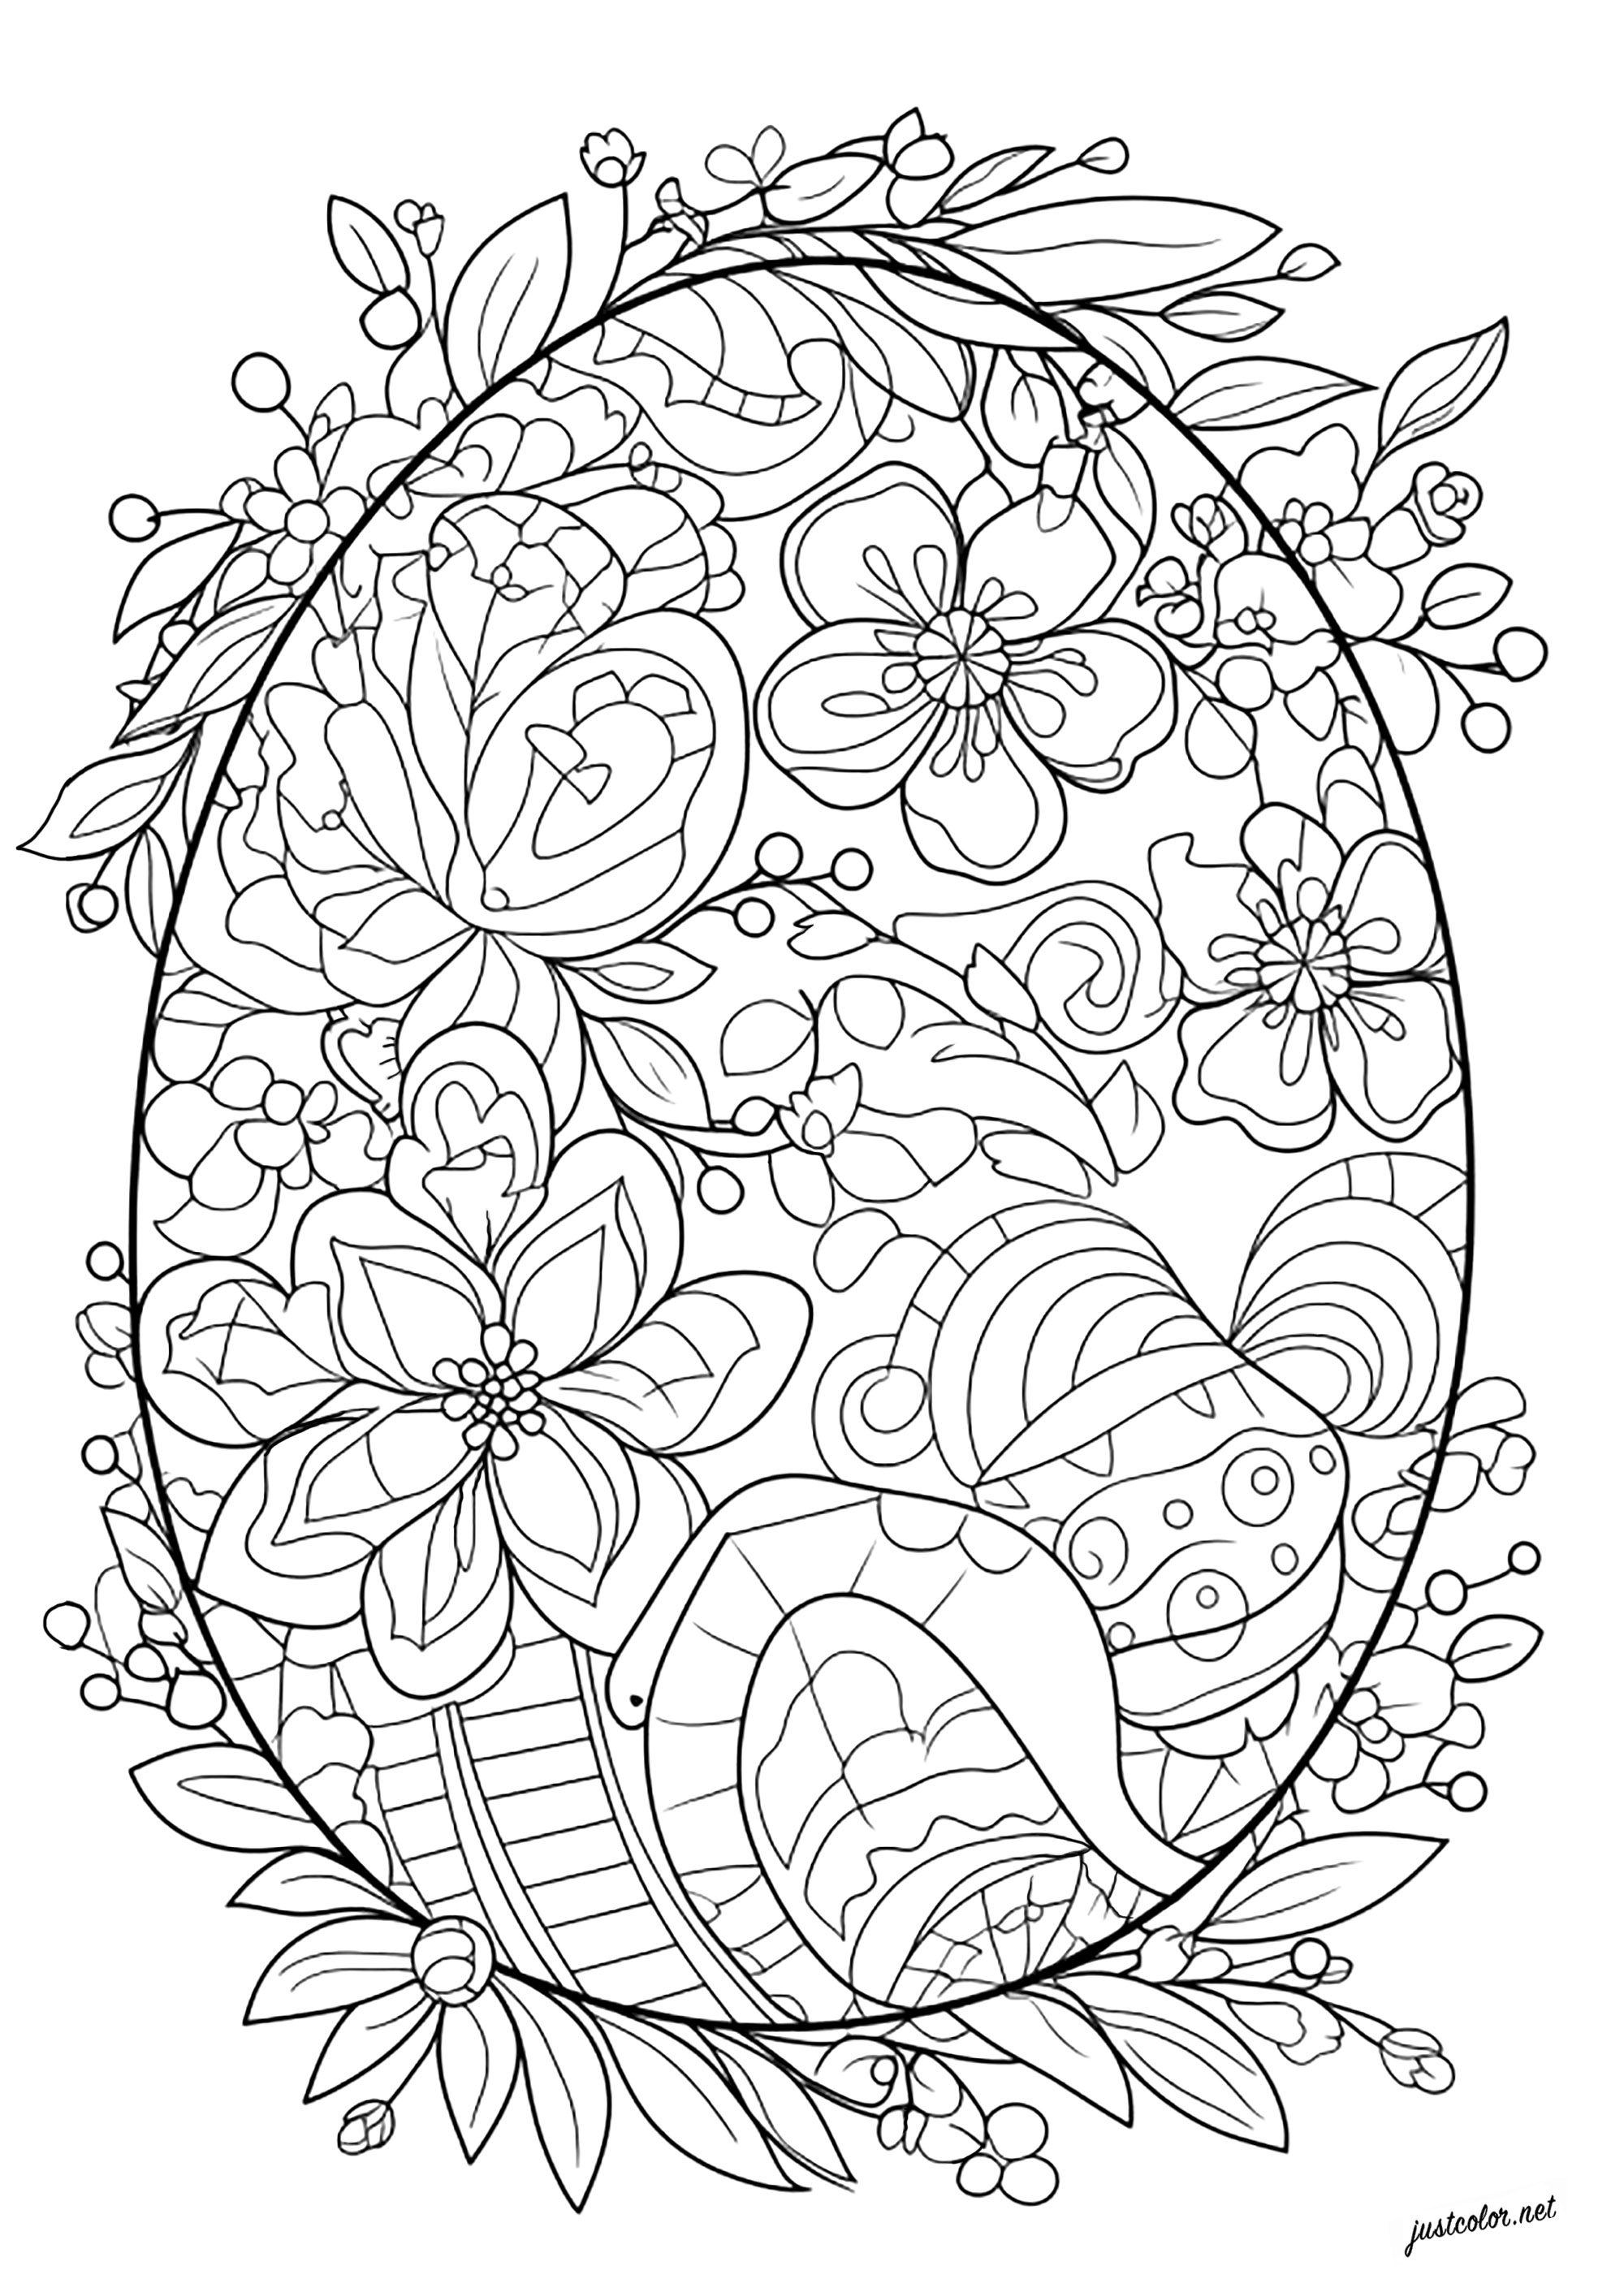 Ovo de Páscoa para colorirMuitas flores e folhas para colorir neste lindo ovo de Páscoa